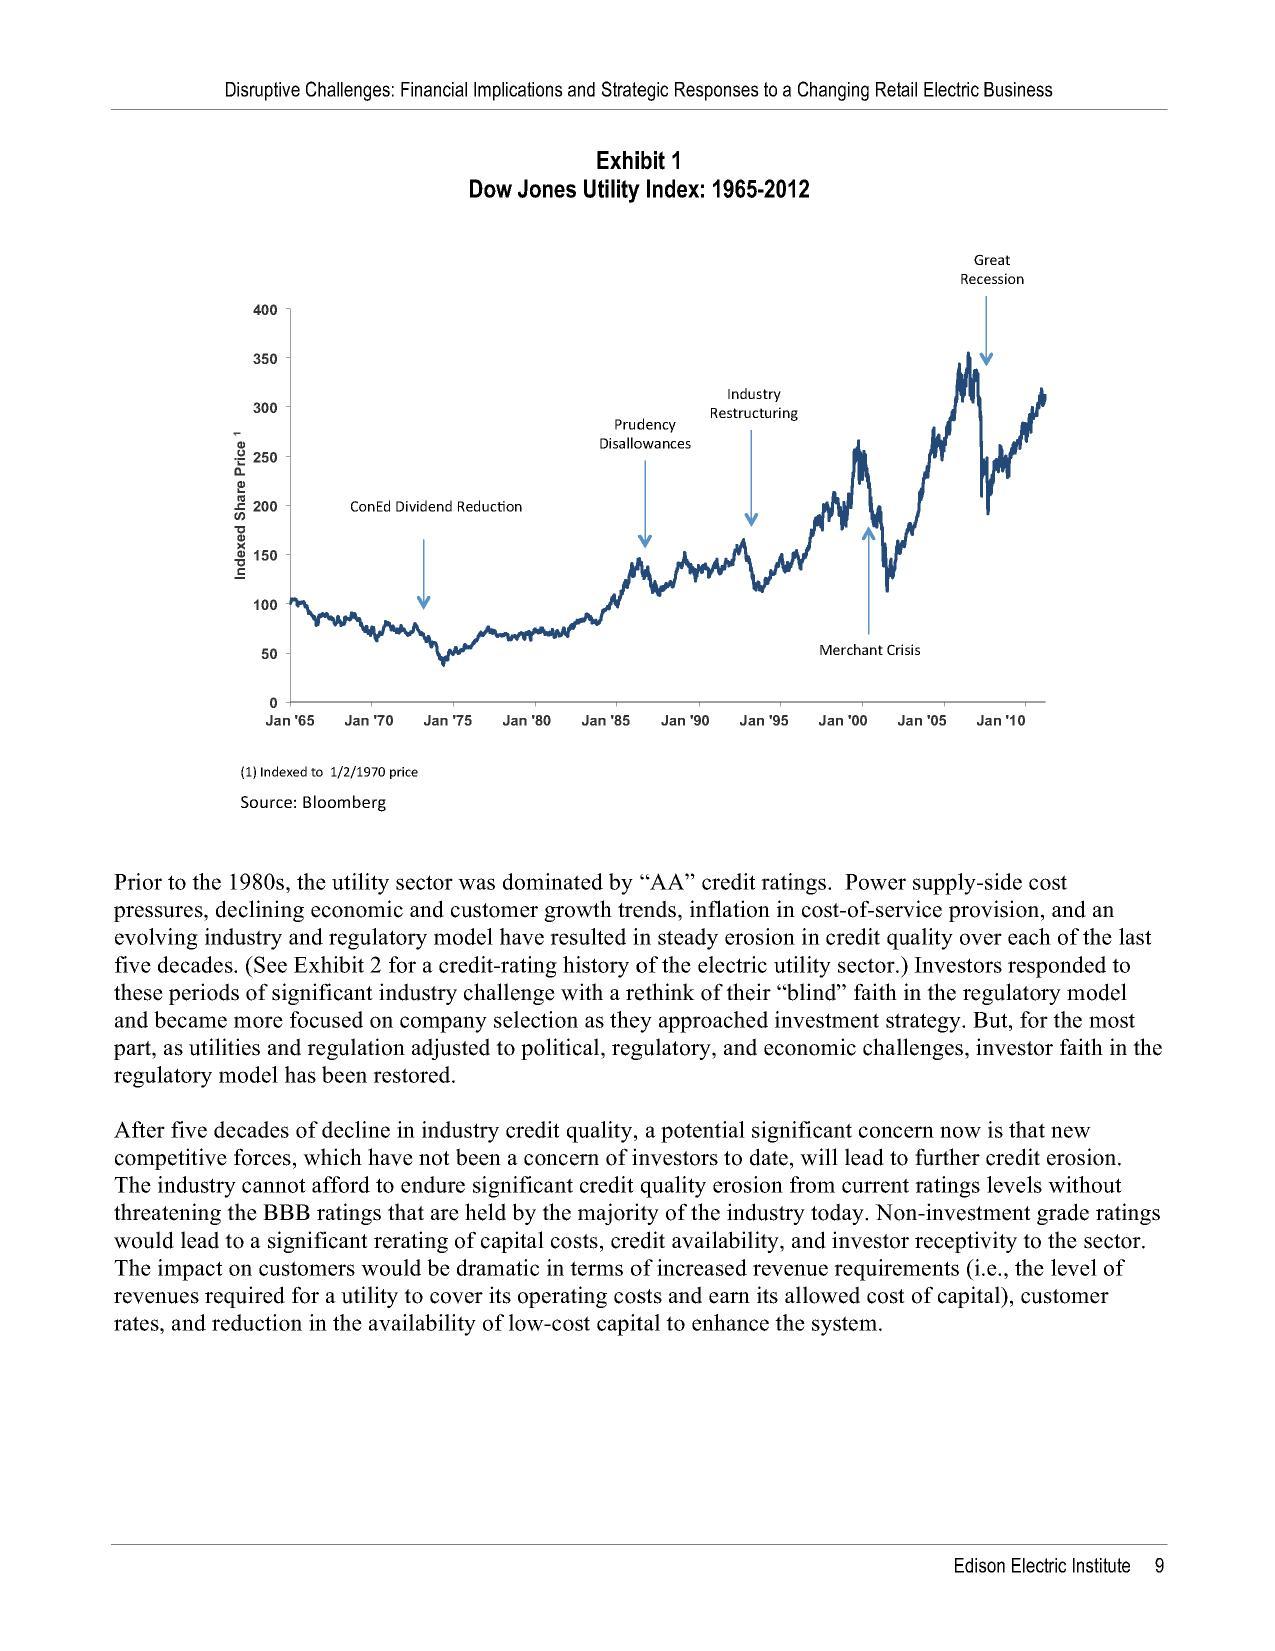 Exhibit 1: Dow Jones Utility Index: 1965-2012